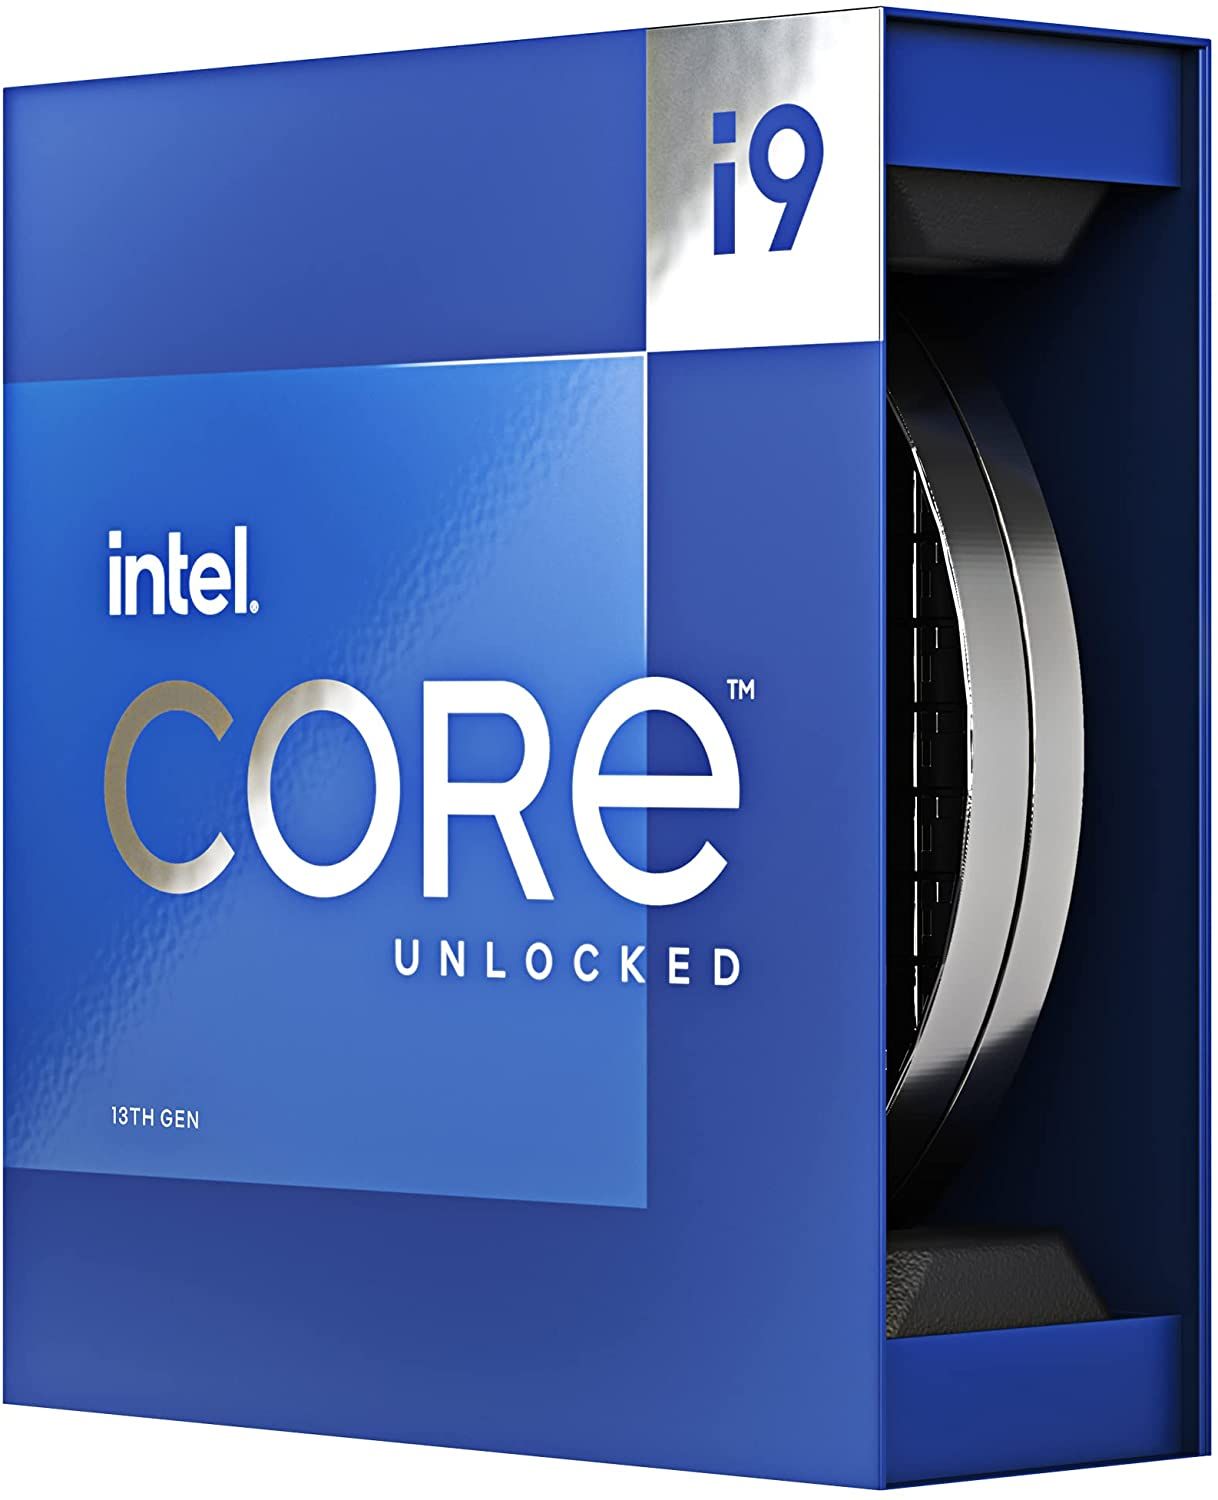 Intel Core i9 13900K Processor